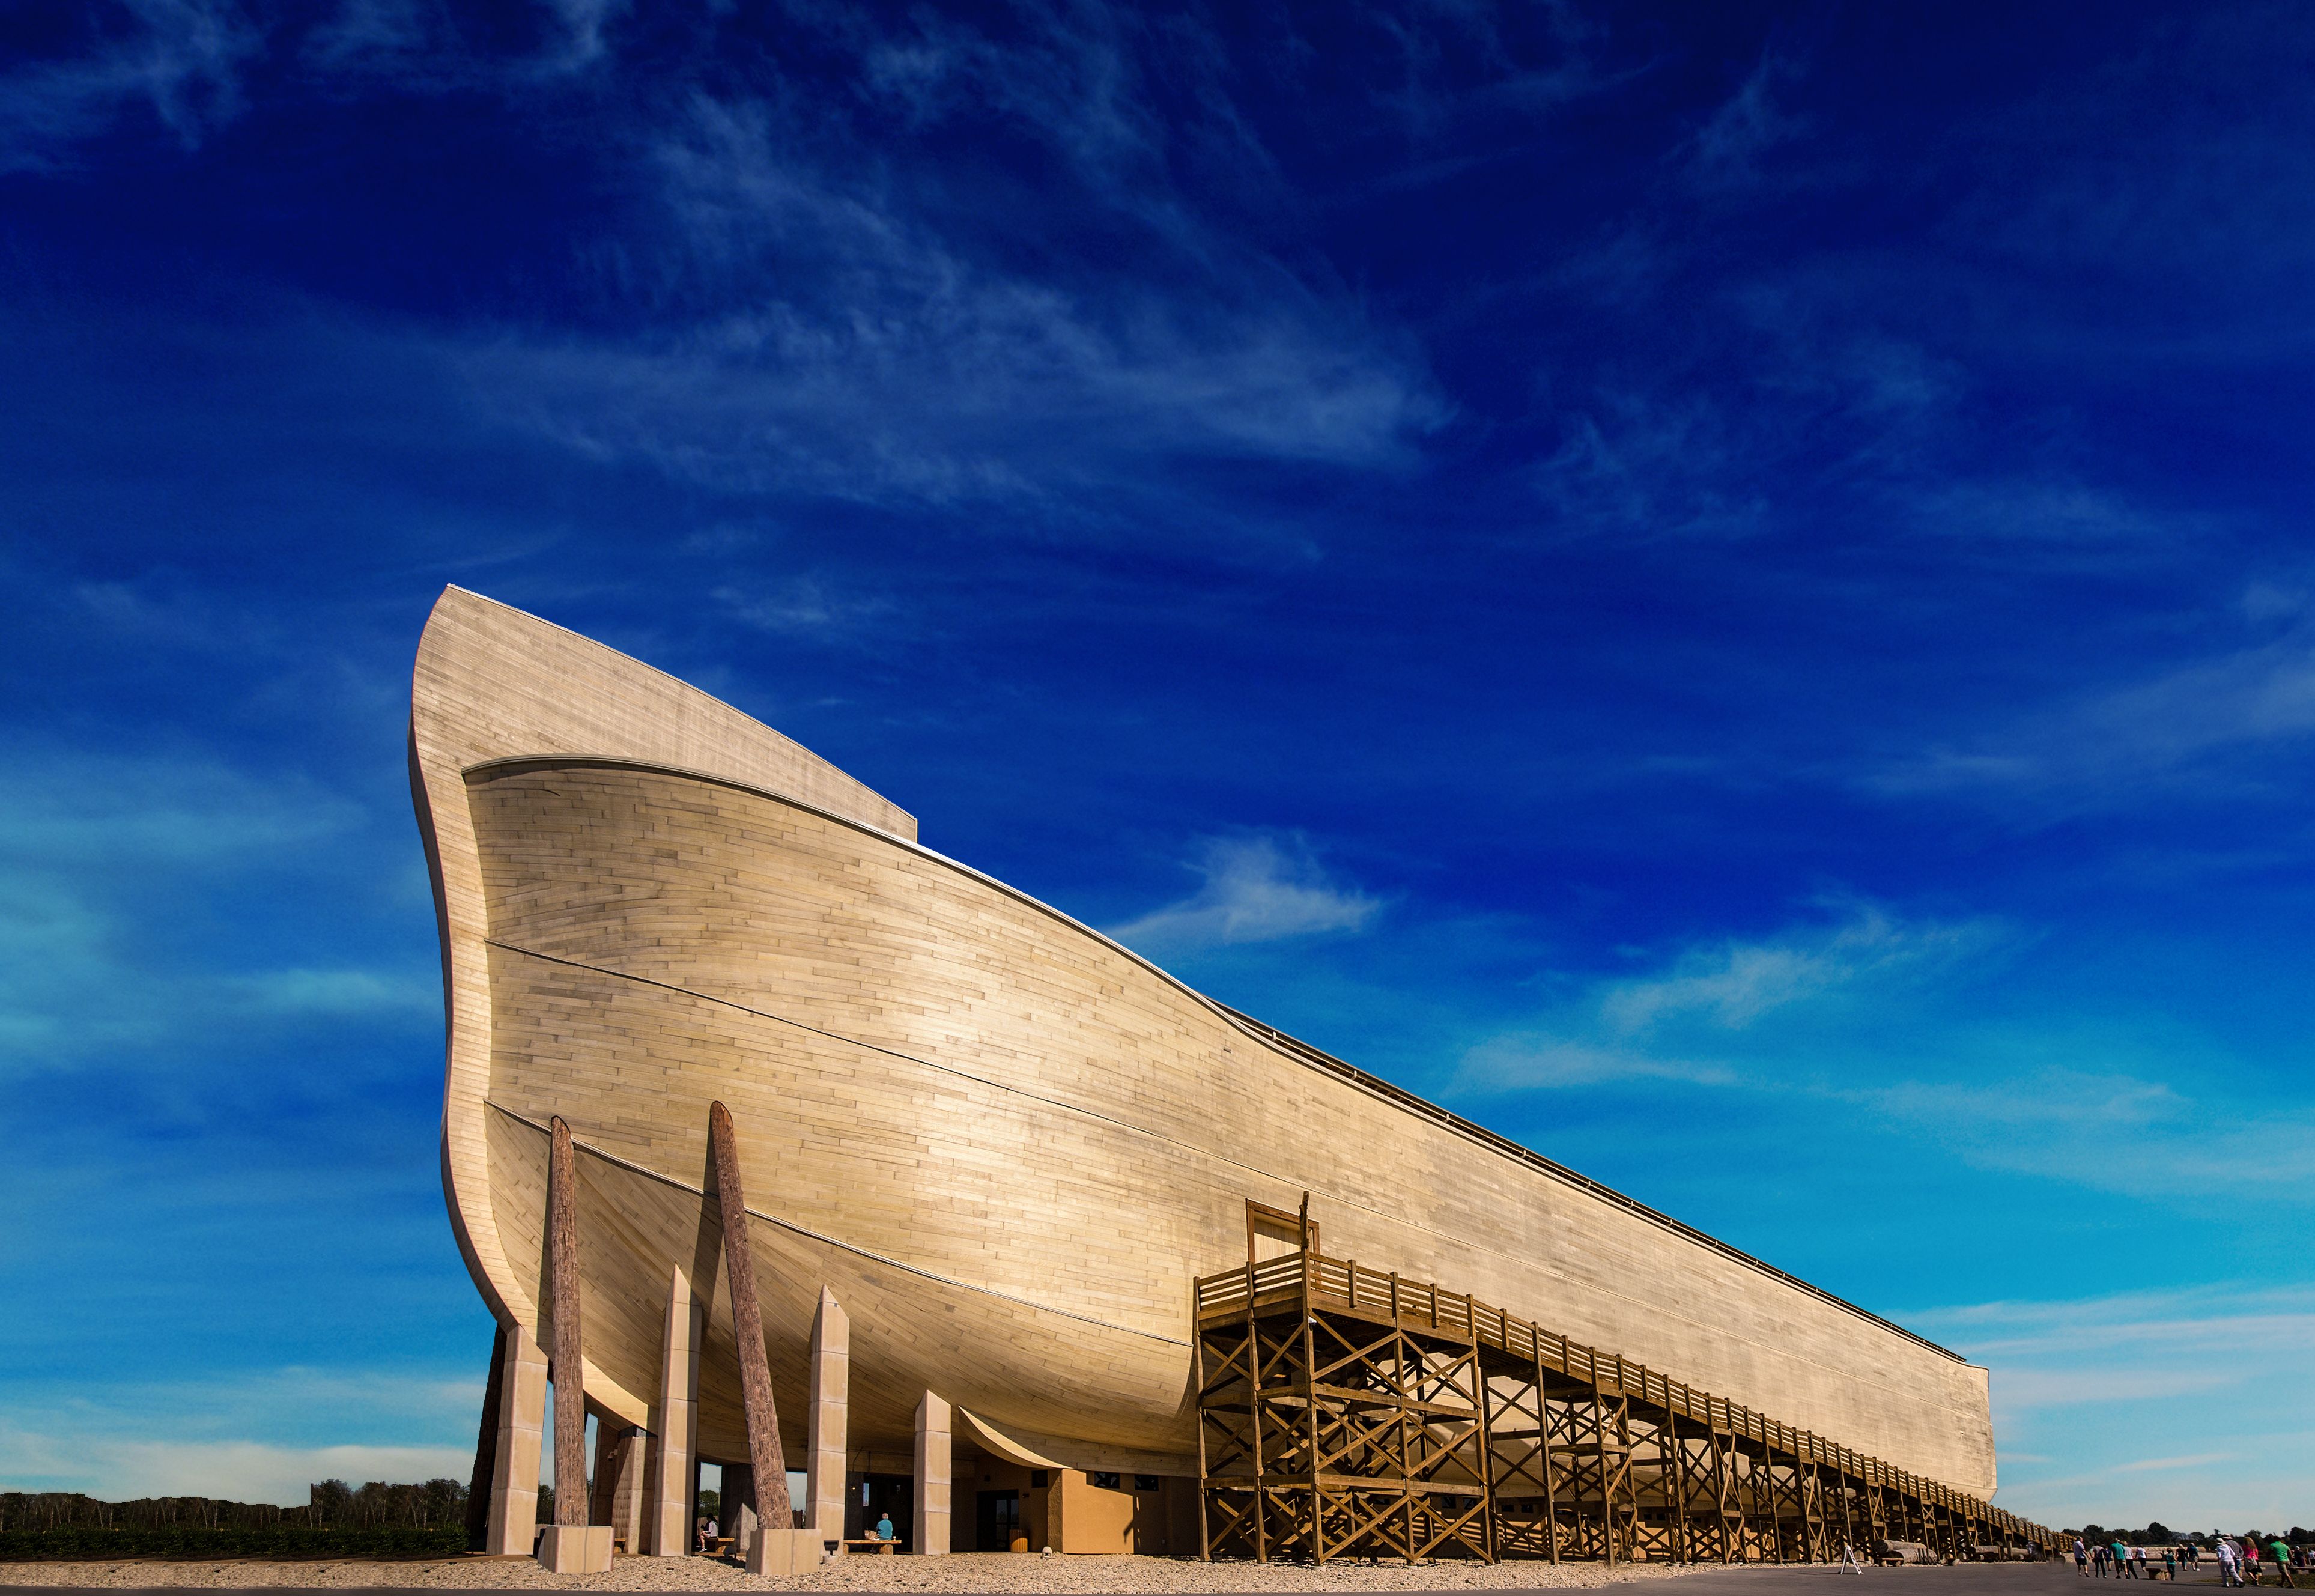 Owners of a Noah’s Ark replica file a lawsuit over rain damage | CNN